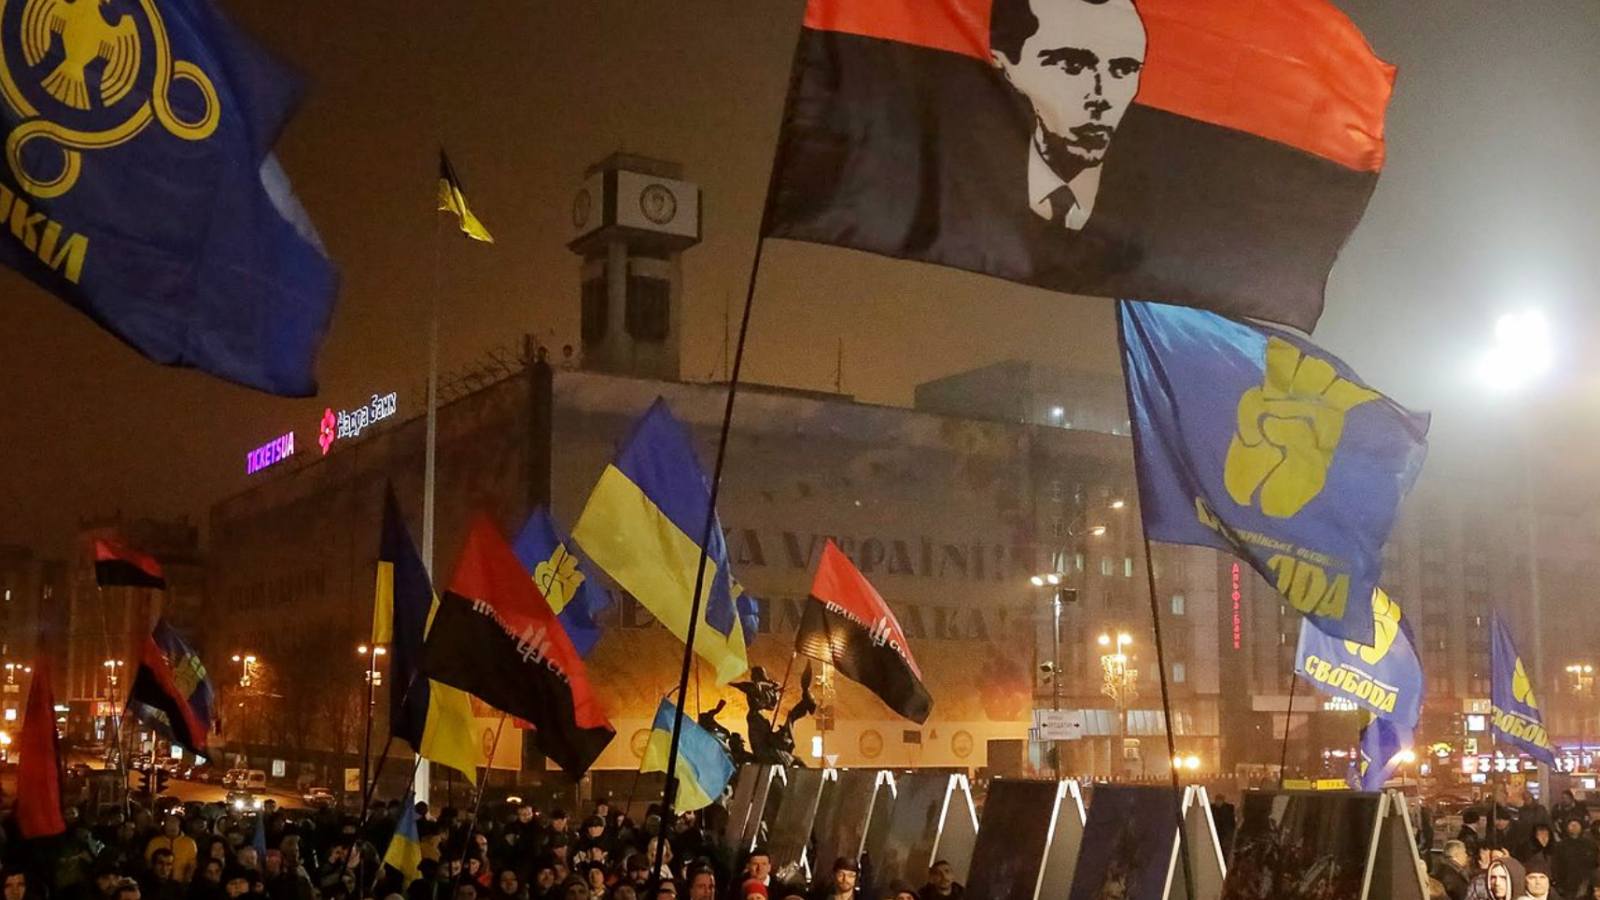 jeppe kofod sort-røde flag ukraine nynazisme nynazist